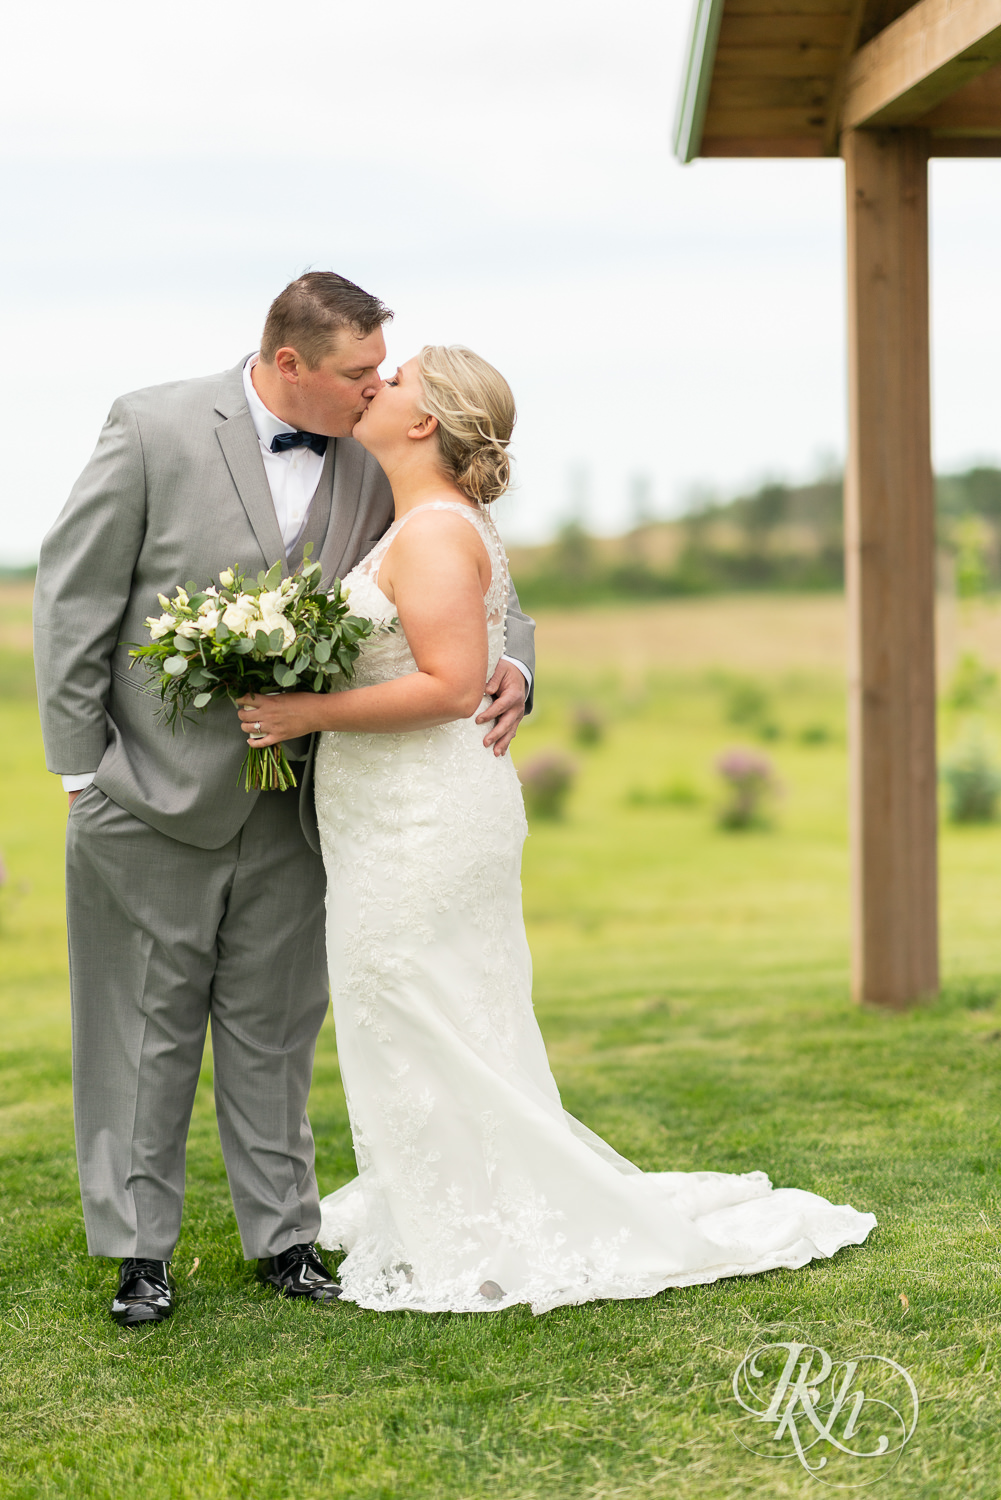 First look between bride and groom at Barn at Mirror Lake in Mondovi, Wisconsin.